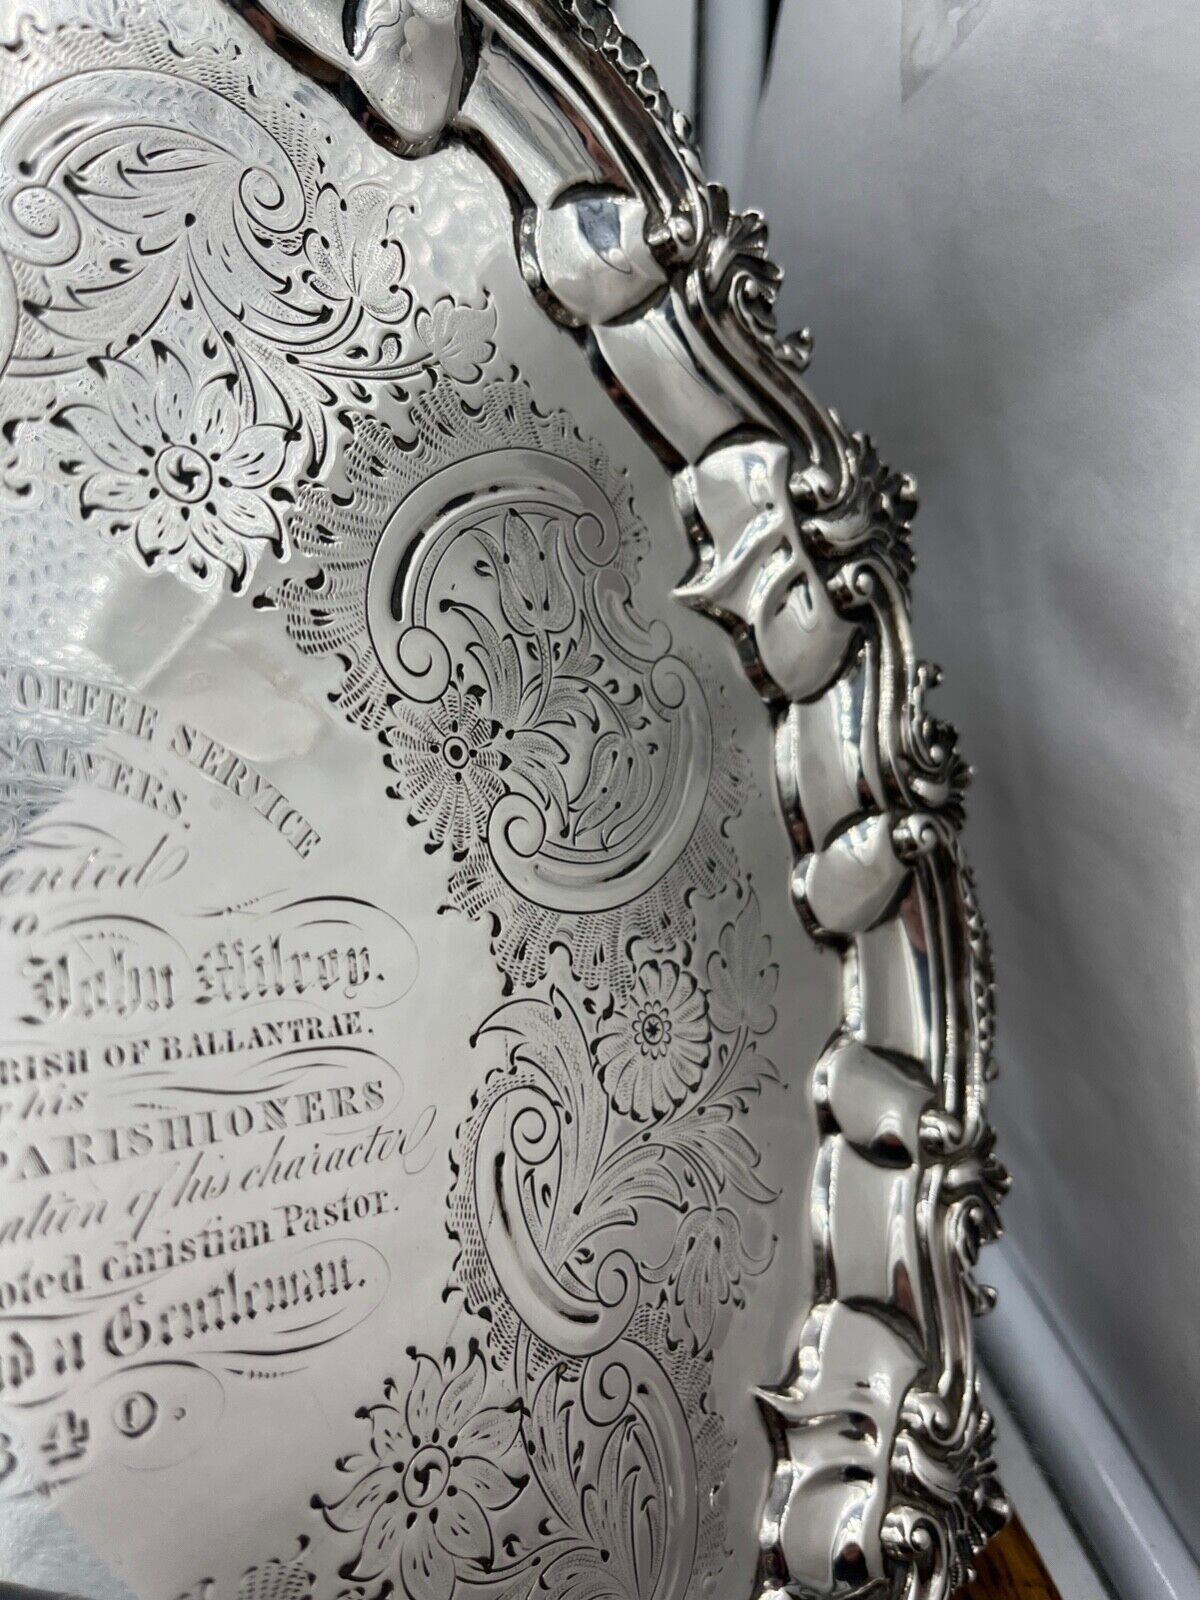 A good quality antique silver salver with presentation inscription London 1807